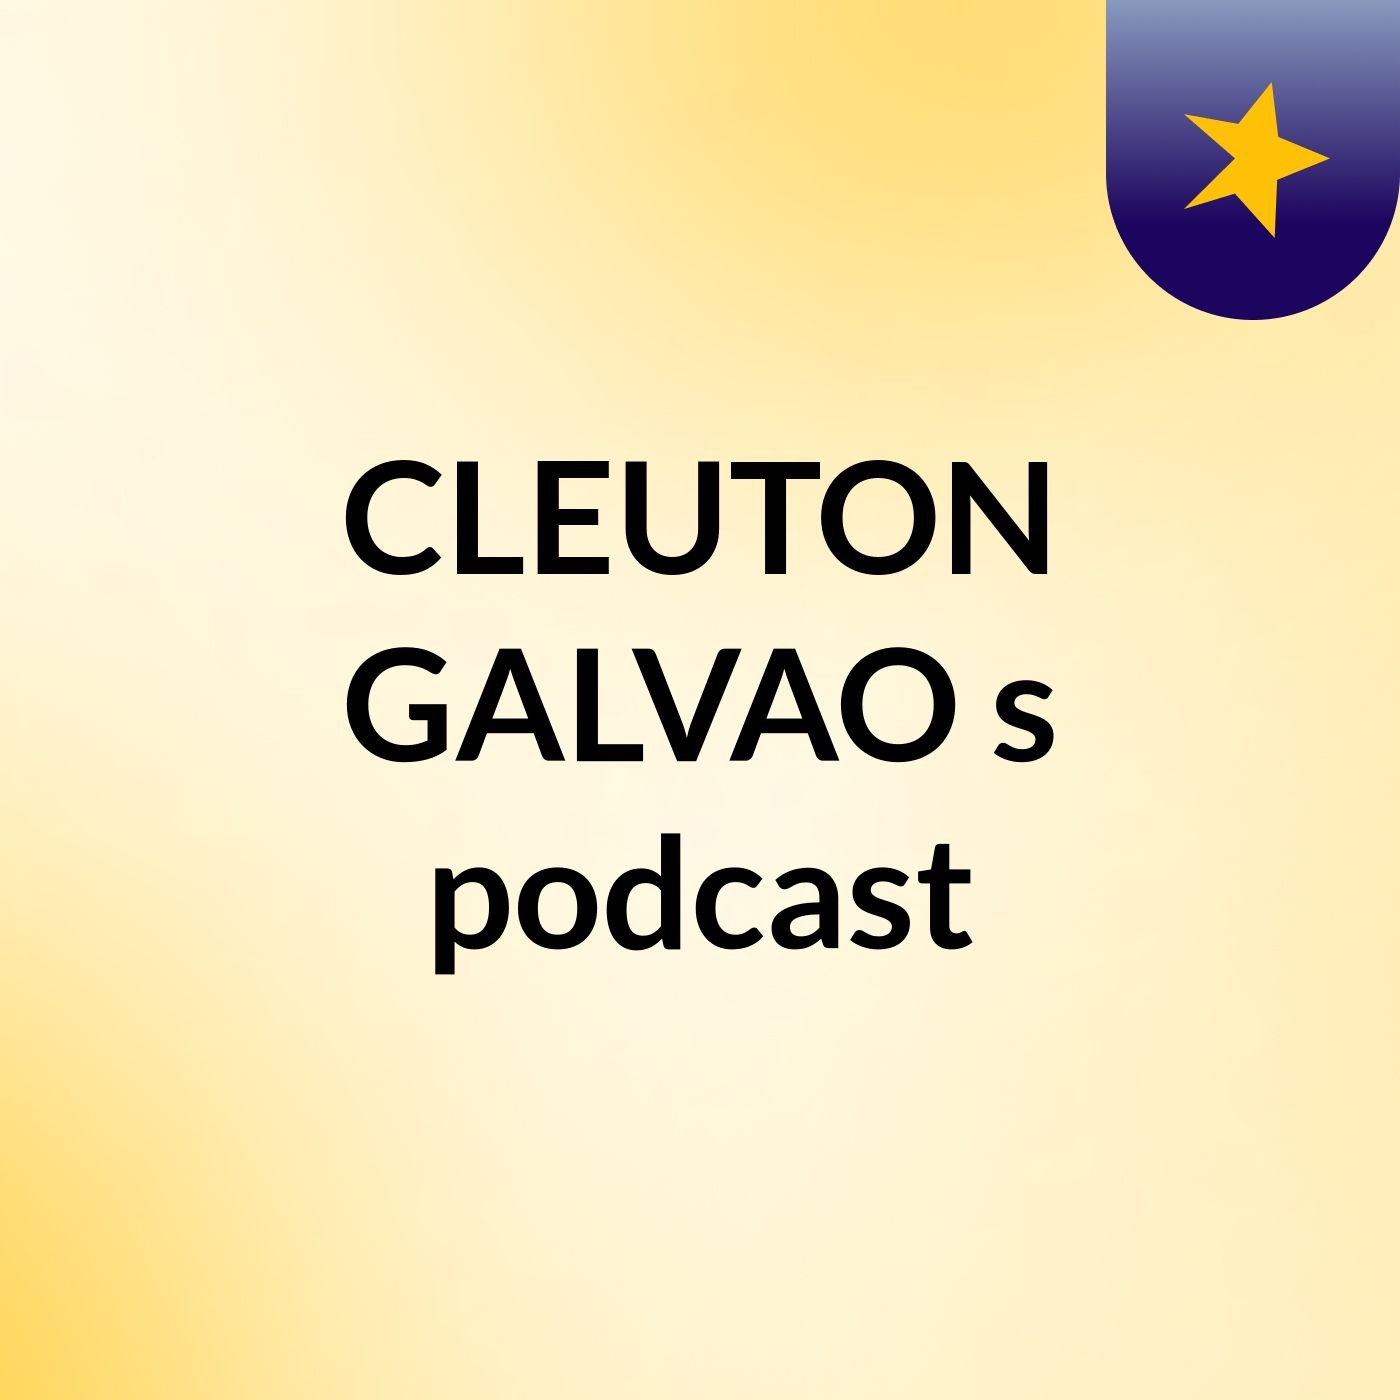 CLEUTON GALVAO's podcast